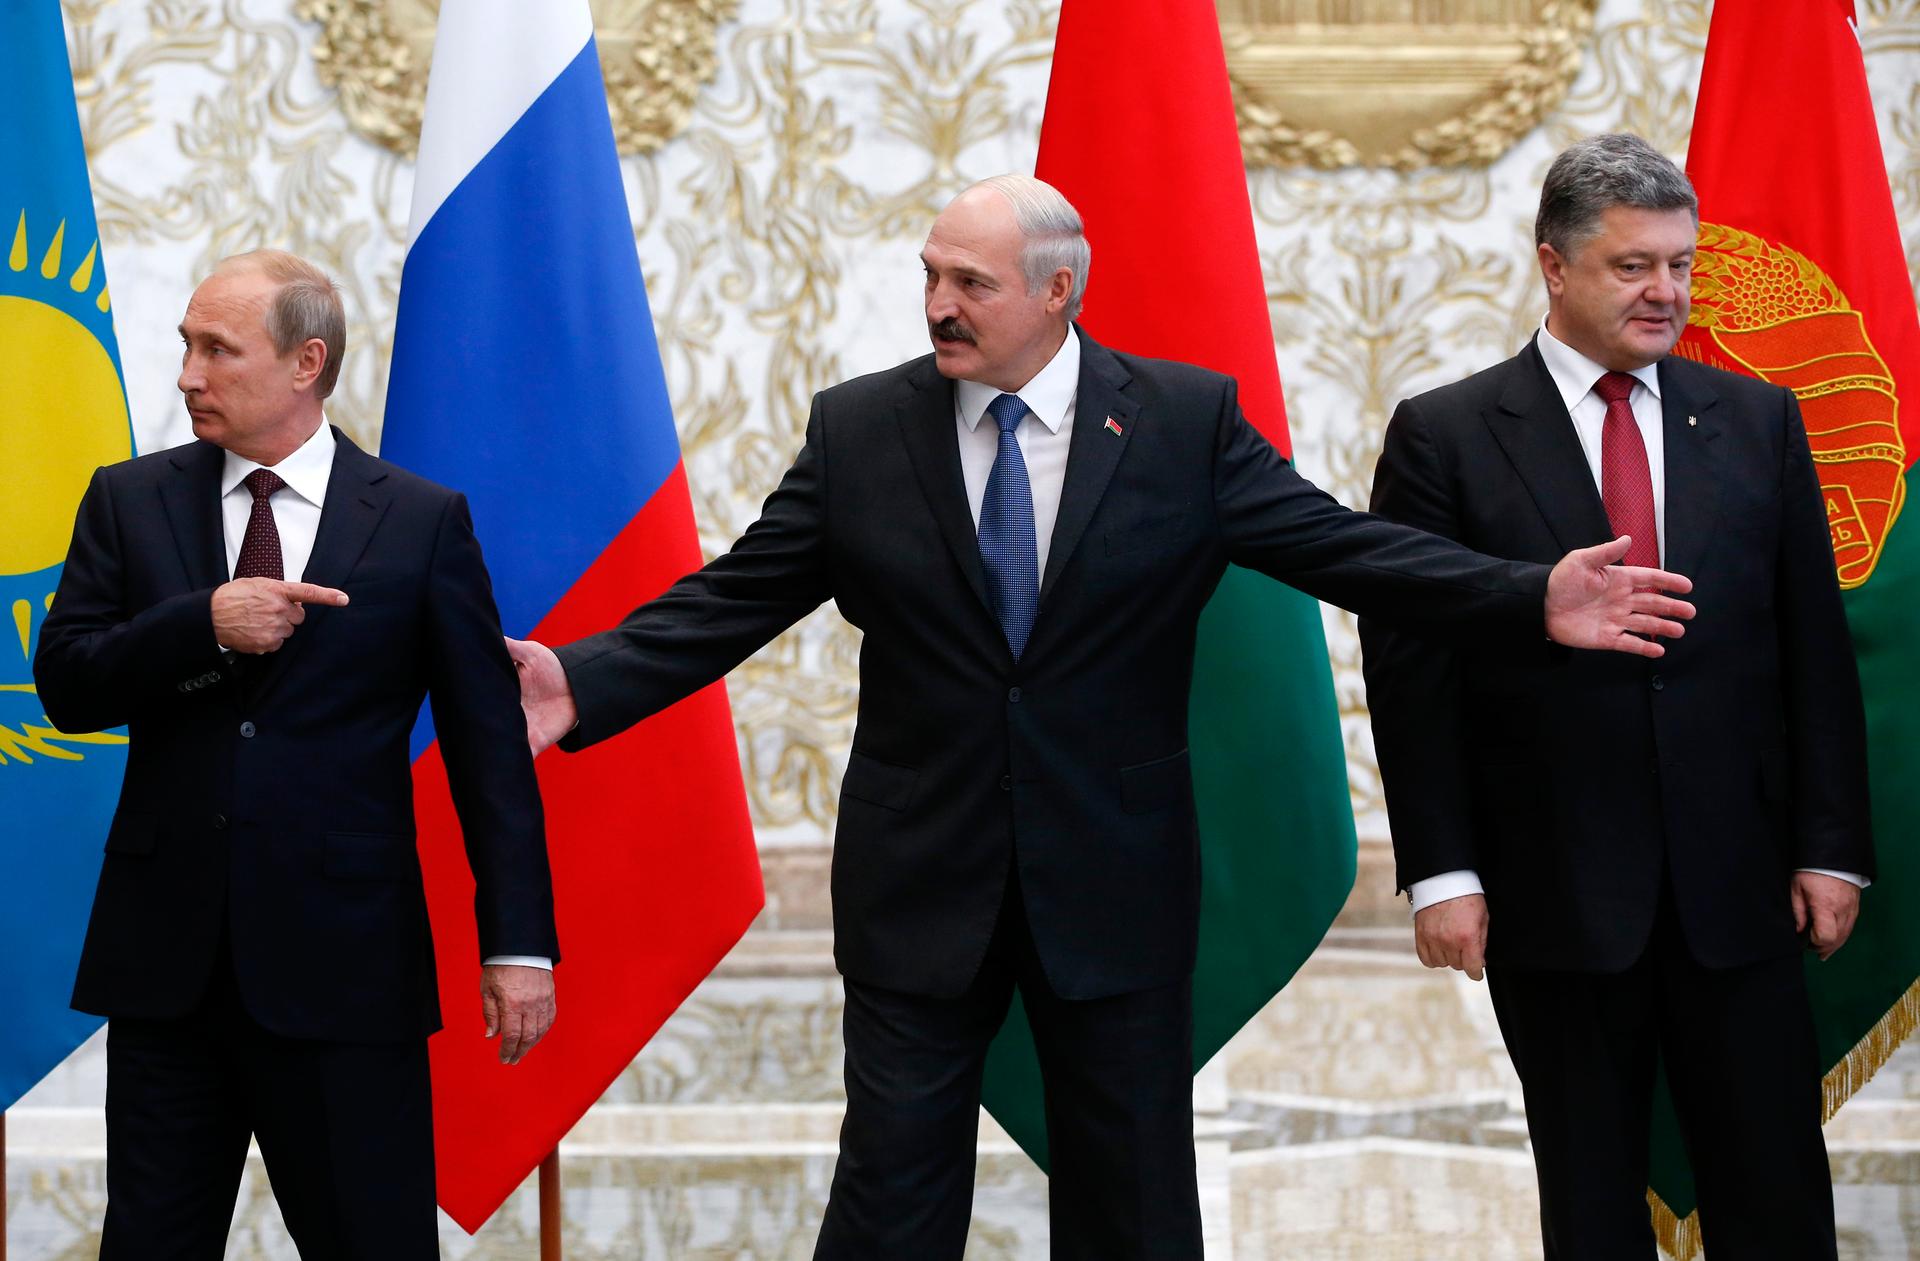 Russia's President Vladimir Putin, Belarus' President Alexander Lukashenko and Ukraine's President Petro Poroshenko react while posing for a group photo during peace talks that started in Minsk on August 26, 2014.